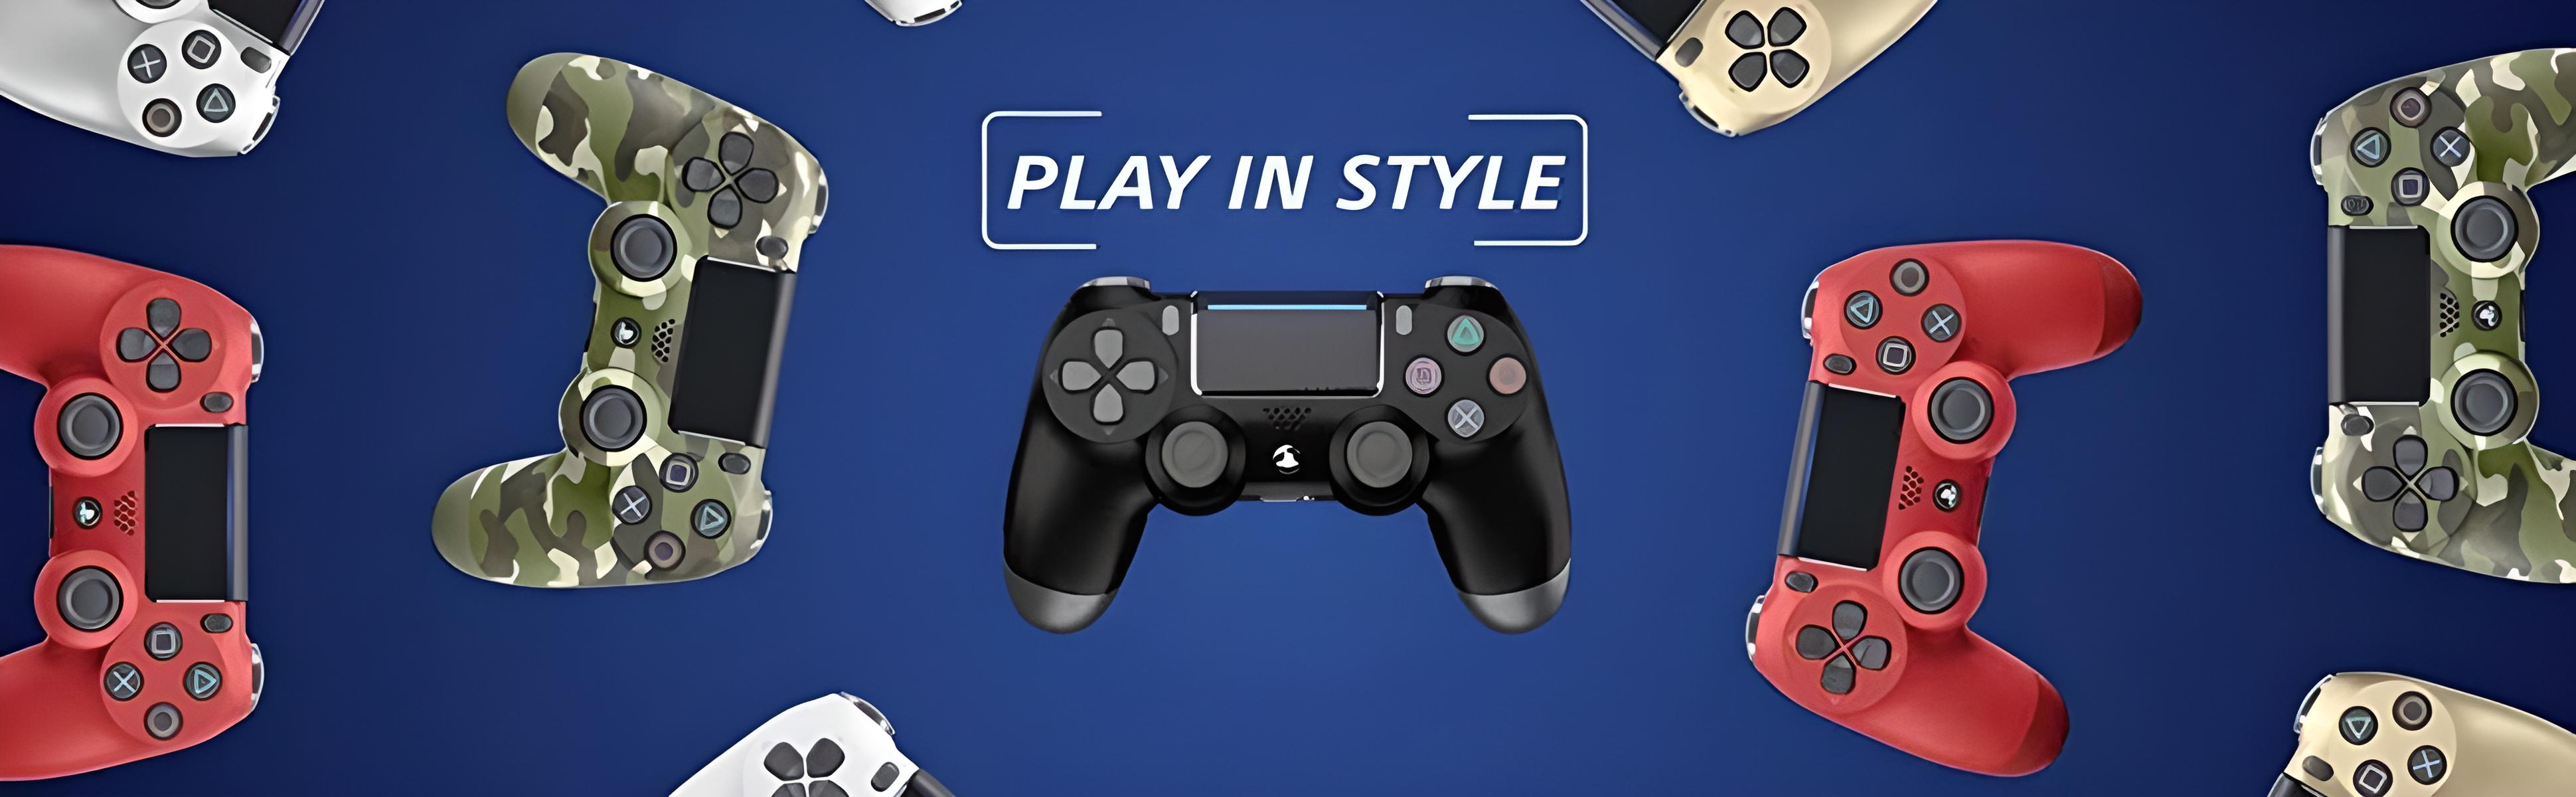 Controle Sem Fio Dualshock Playstation 4 Sony - Preto